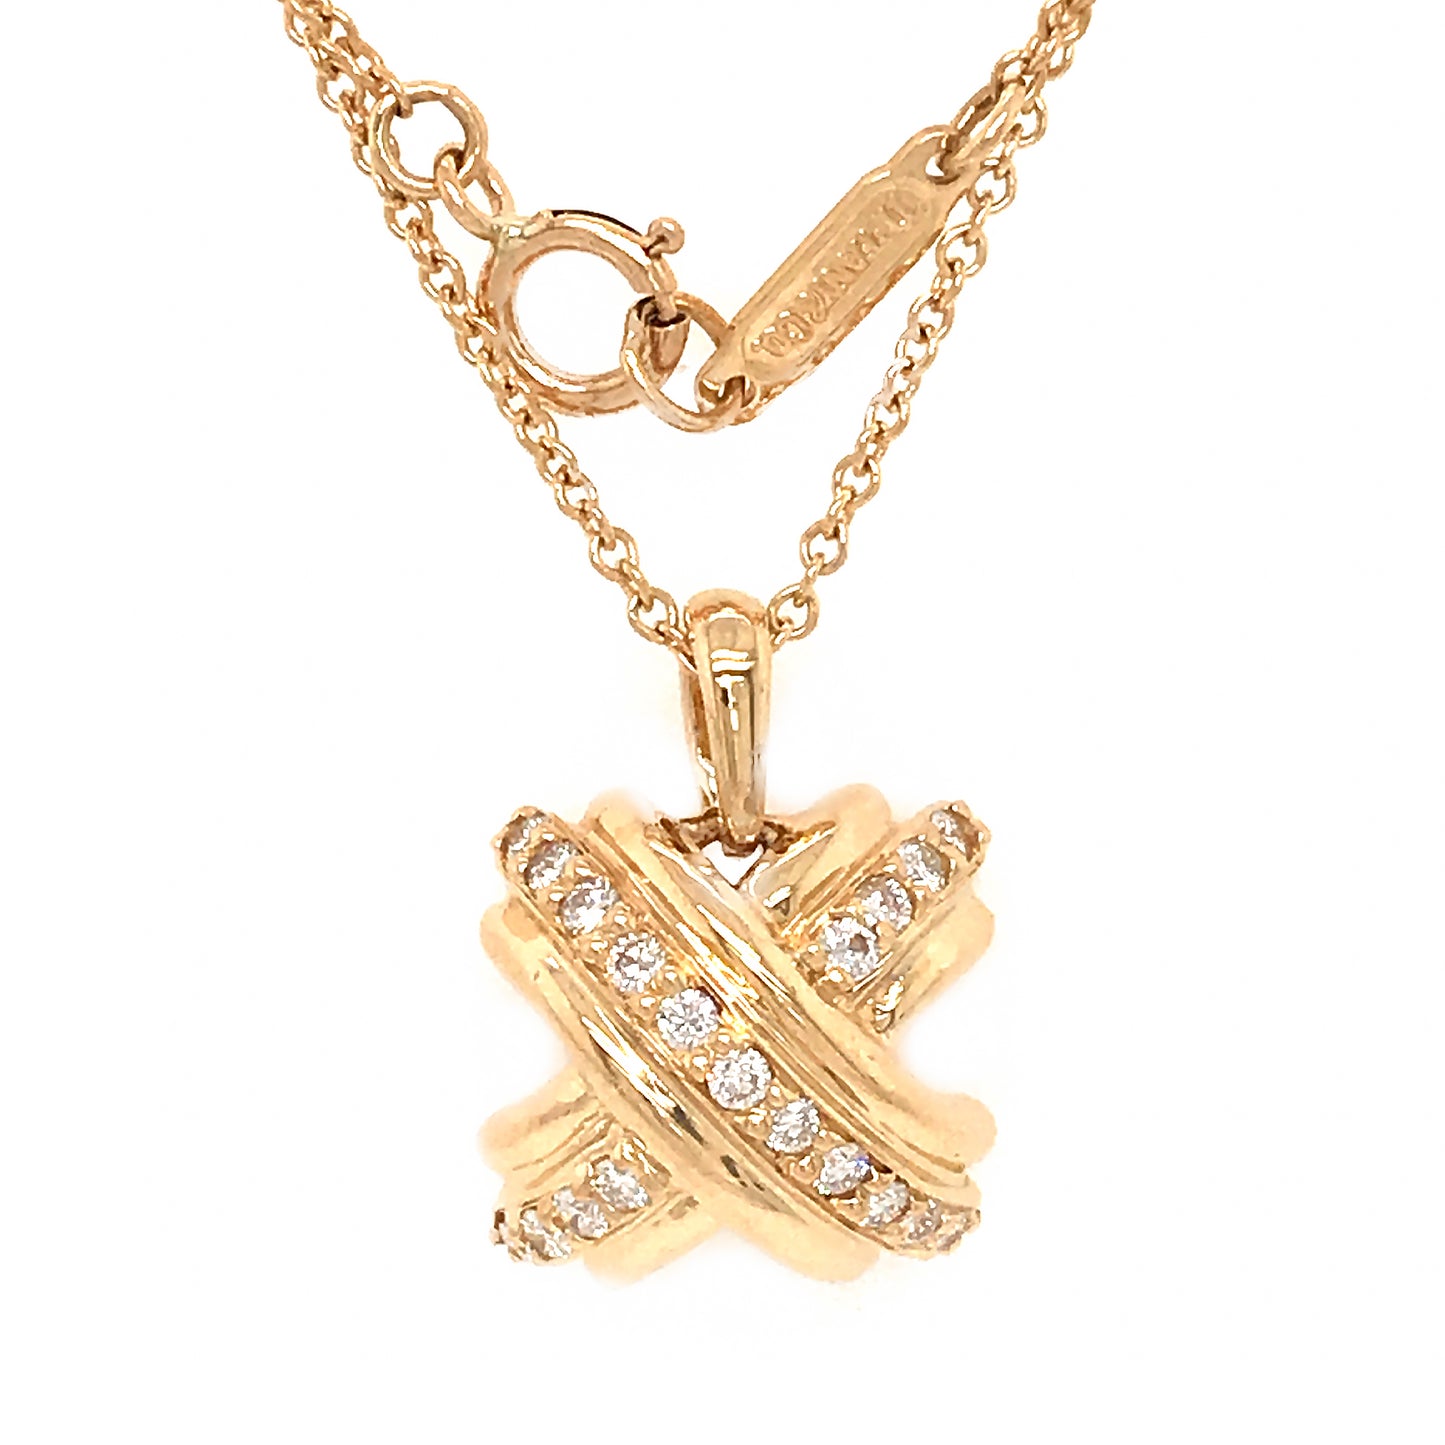 SOLD! Tiffany & Co. Signature X Necklace | Tiffany and co necklace, Silver  gold necklace, Tiffany & co.